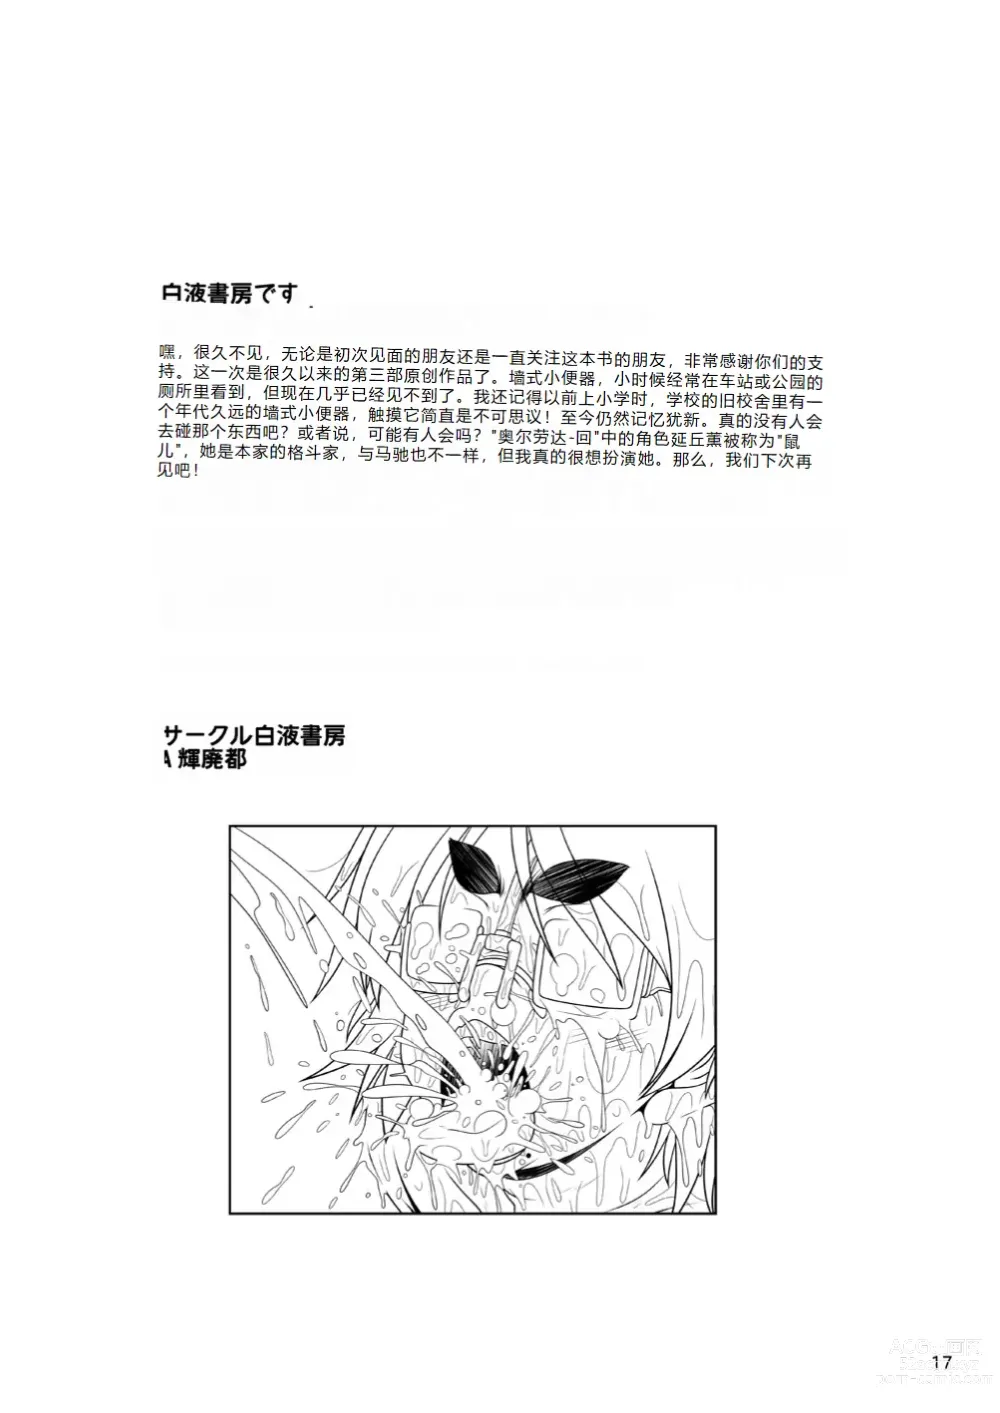 Page 16 of doujinshi Zuggog Taikei no Onna